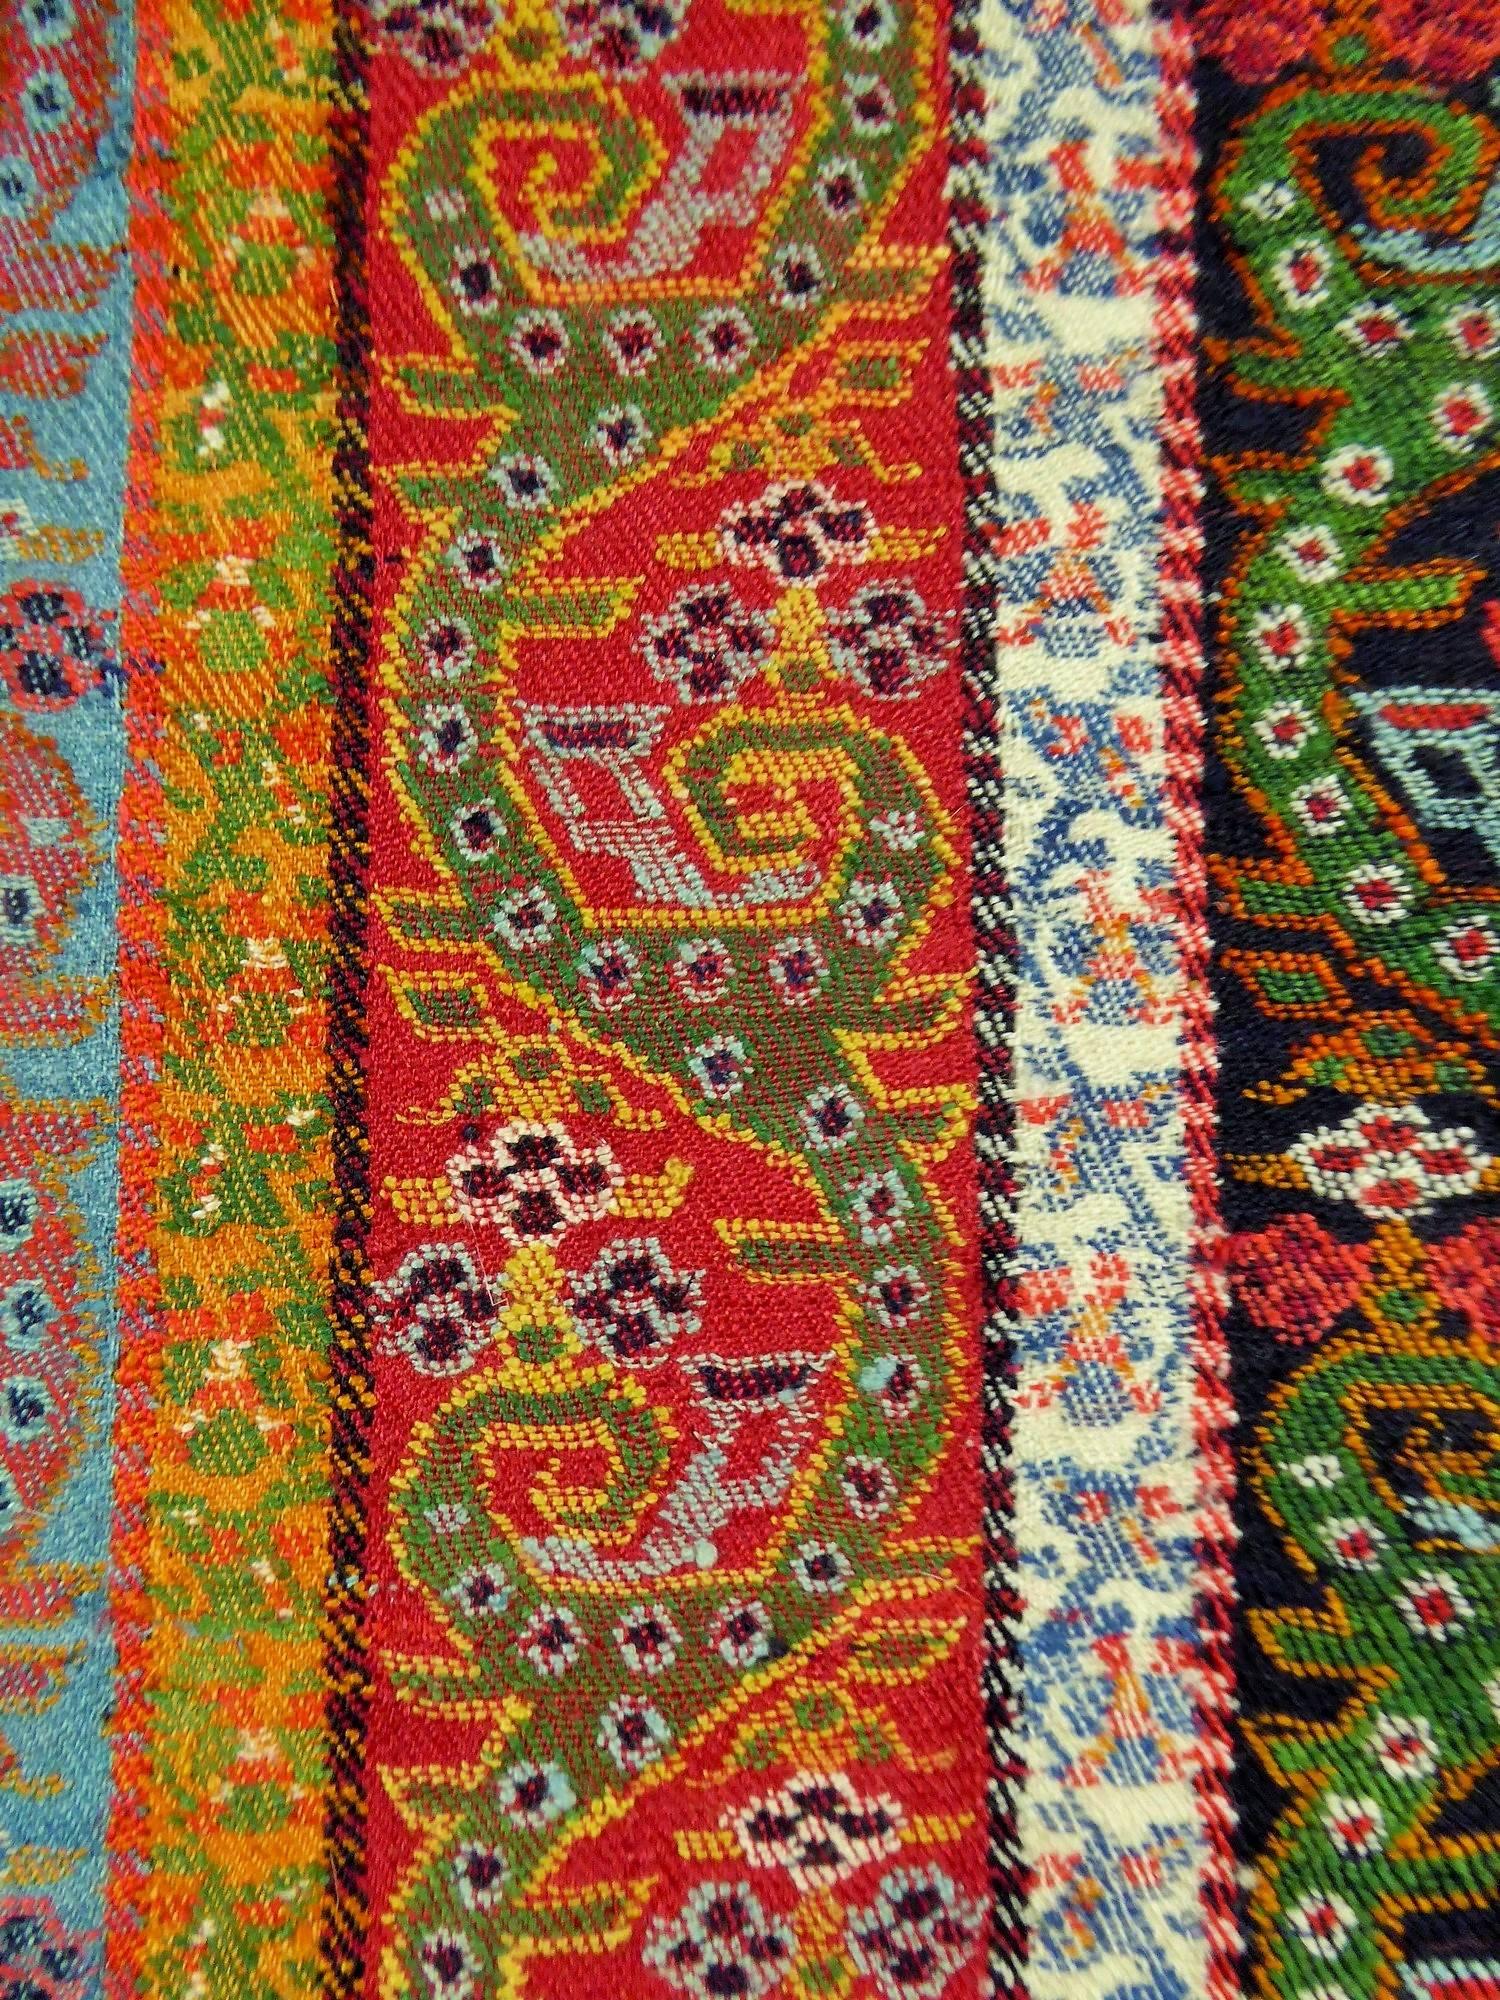 Twill weave striped kashmir shawl  - India or Persia 19th century 3